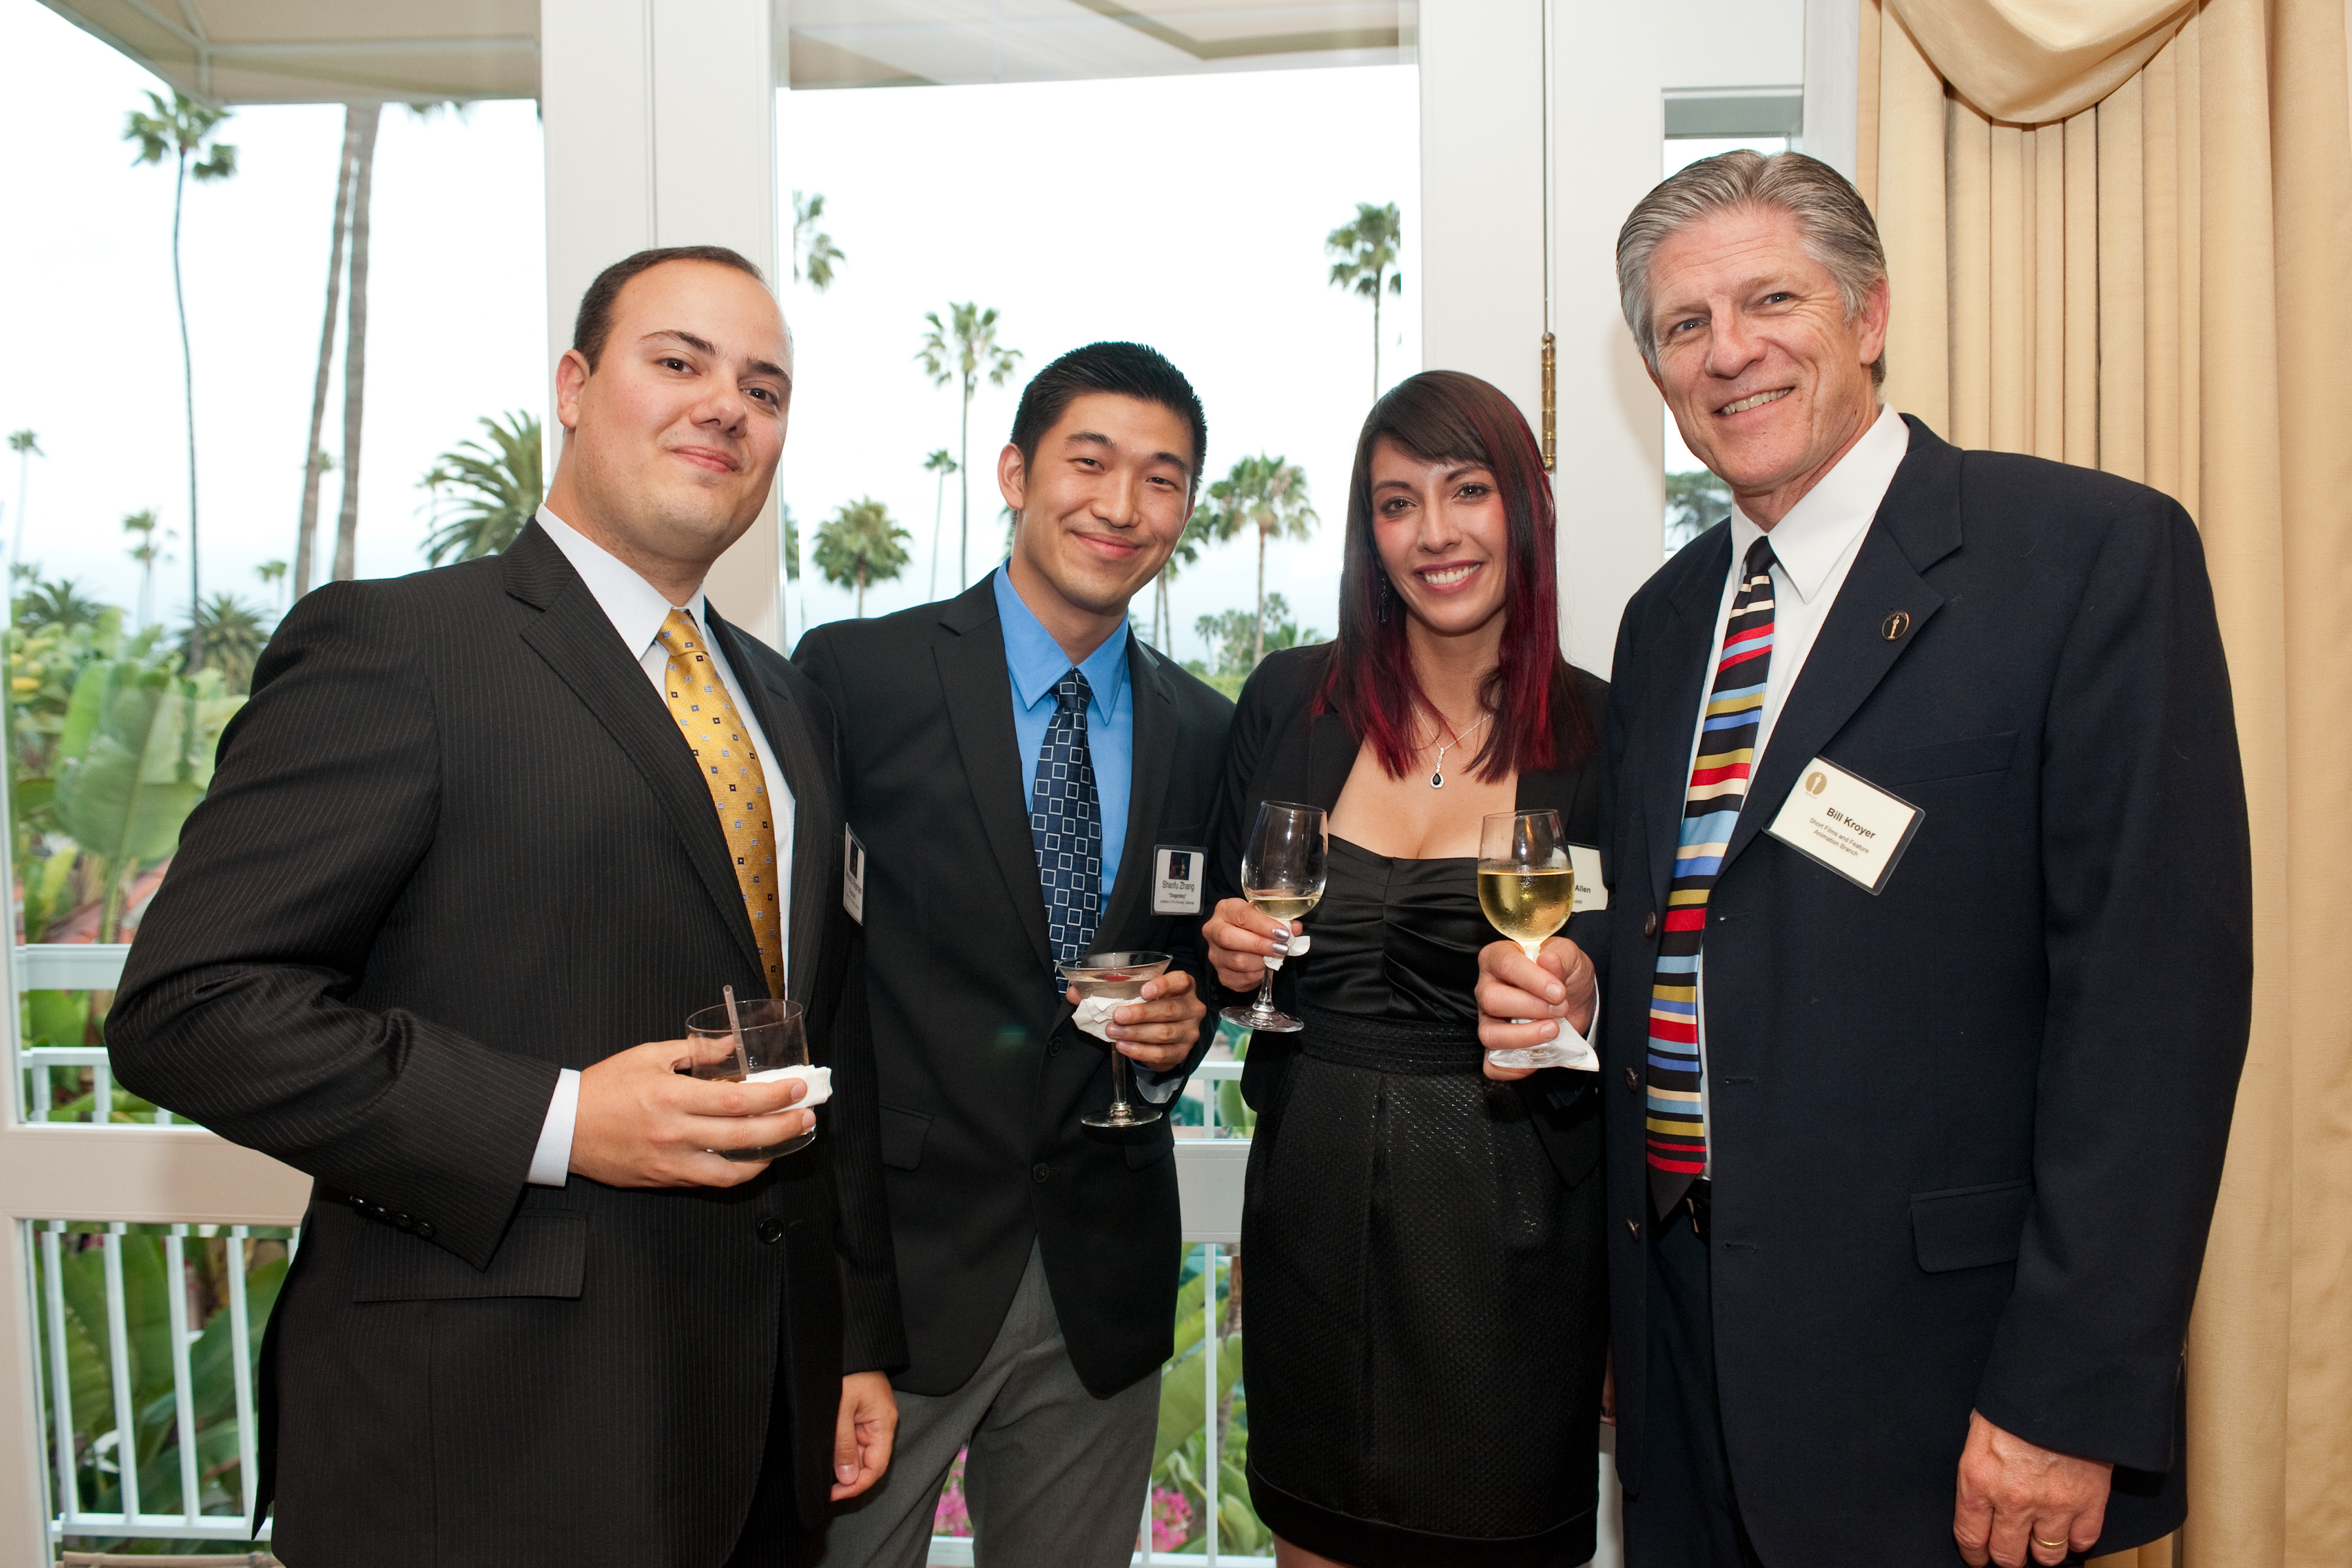 Bernardo Warman with fellow directors Shaofu Zhang, Lisa Allen and Bill Kroyer at the Beverly Hills Hotel.